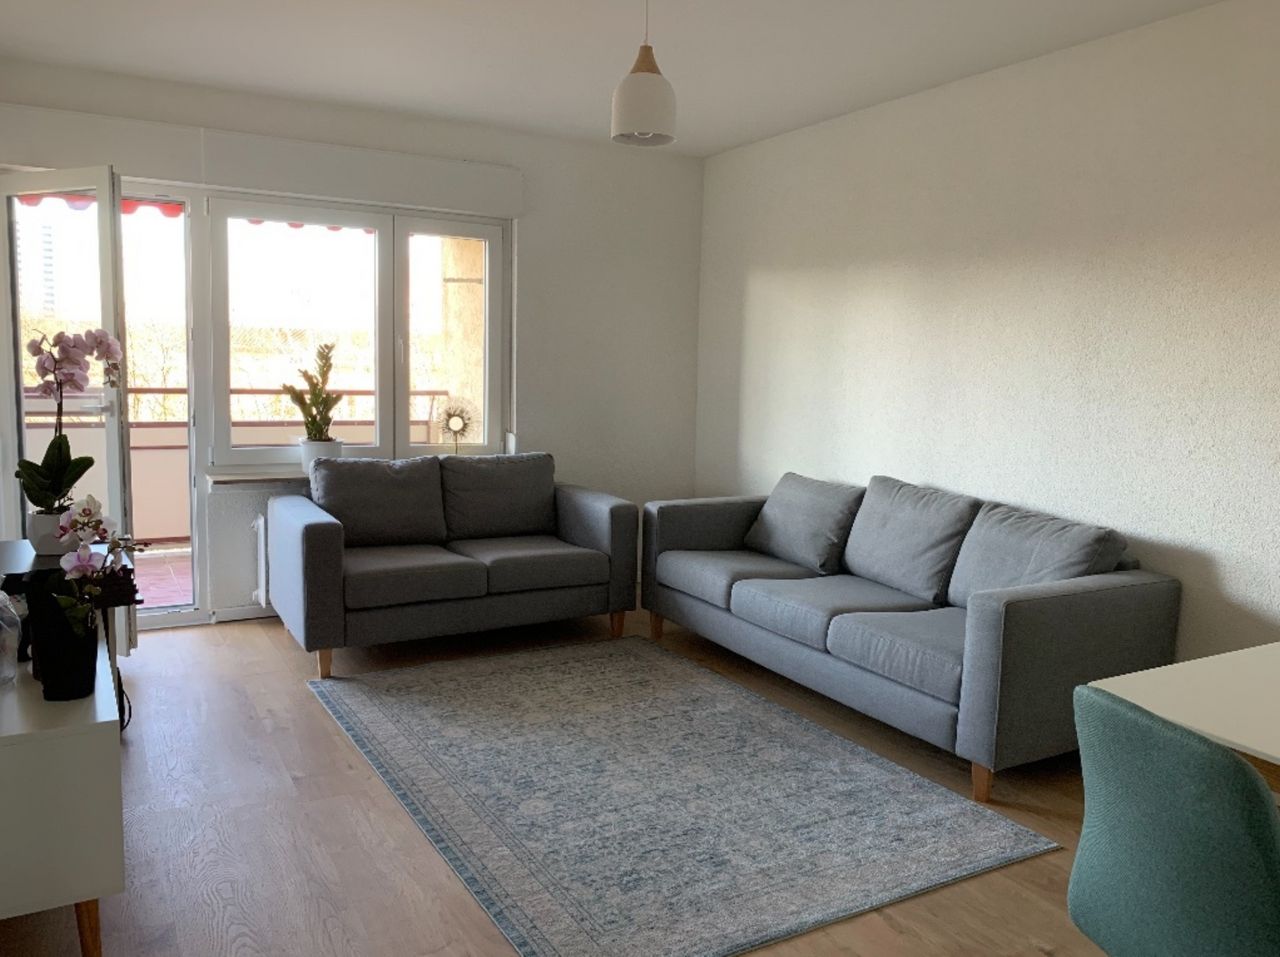 High quality renovated 80 sqm apartment in Stuttgart Möhringen/Fasanenhof